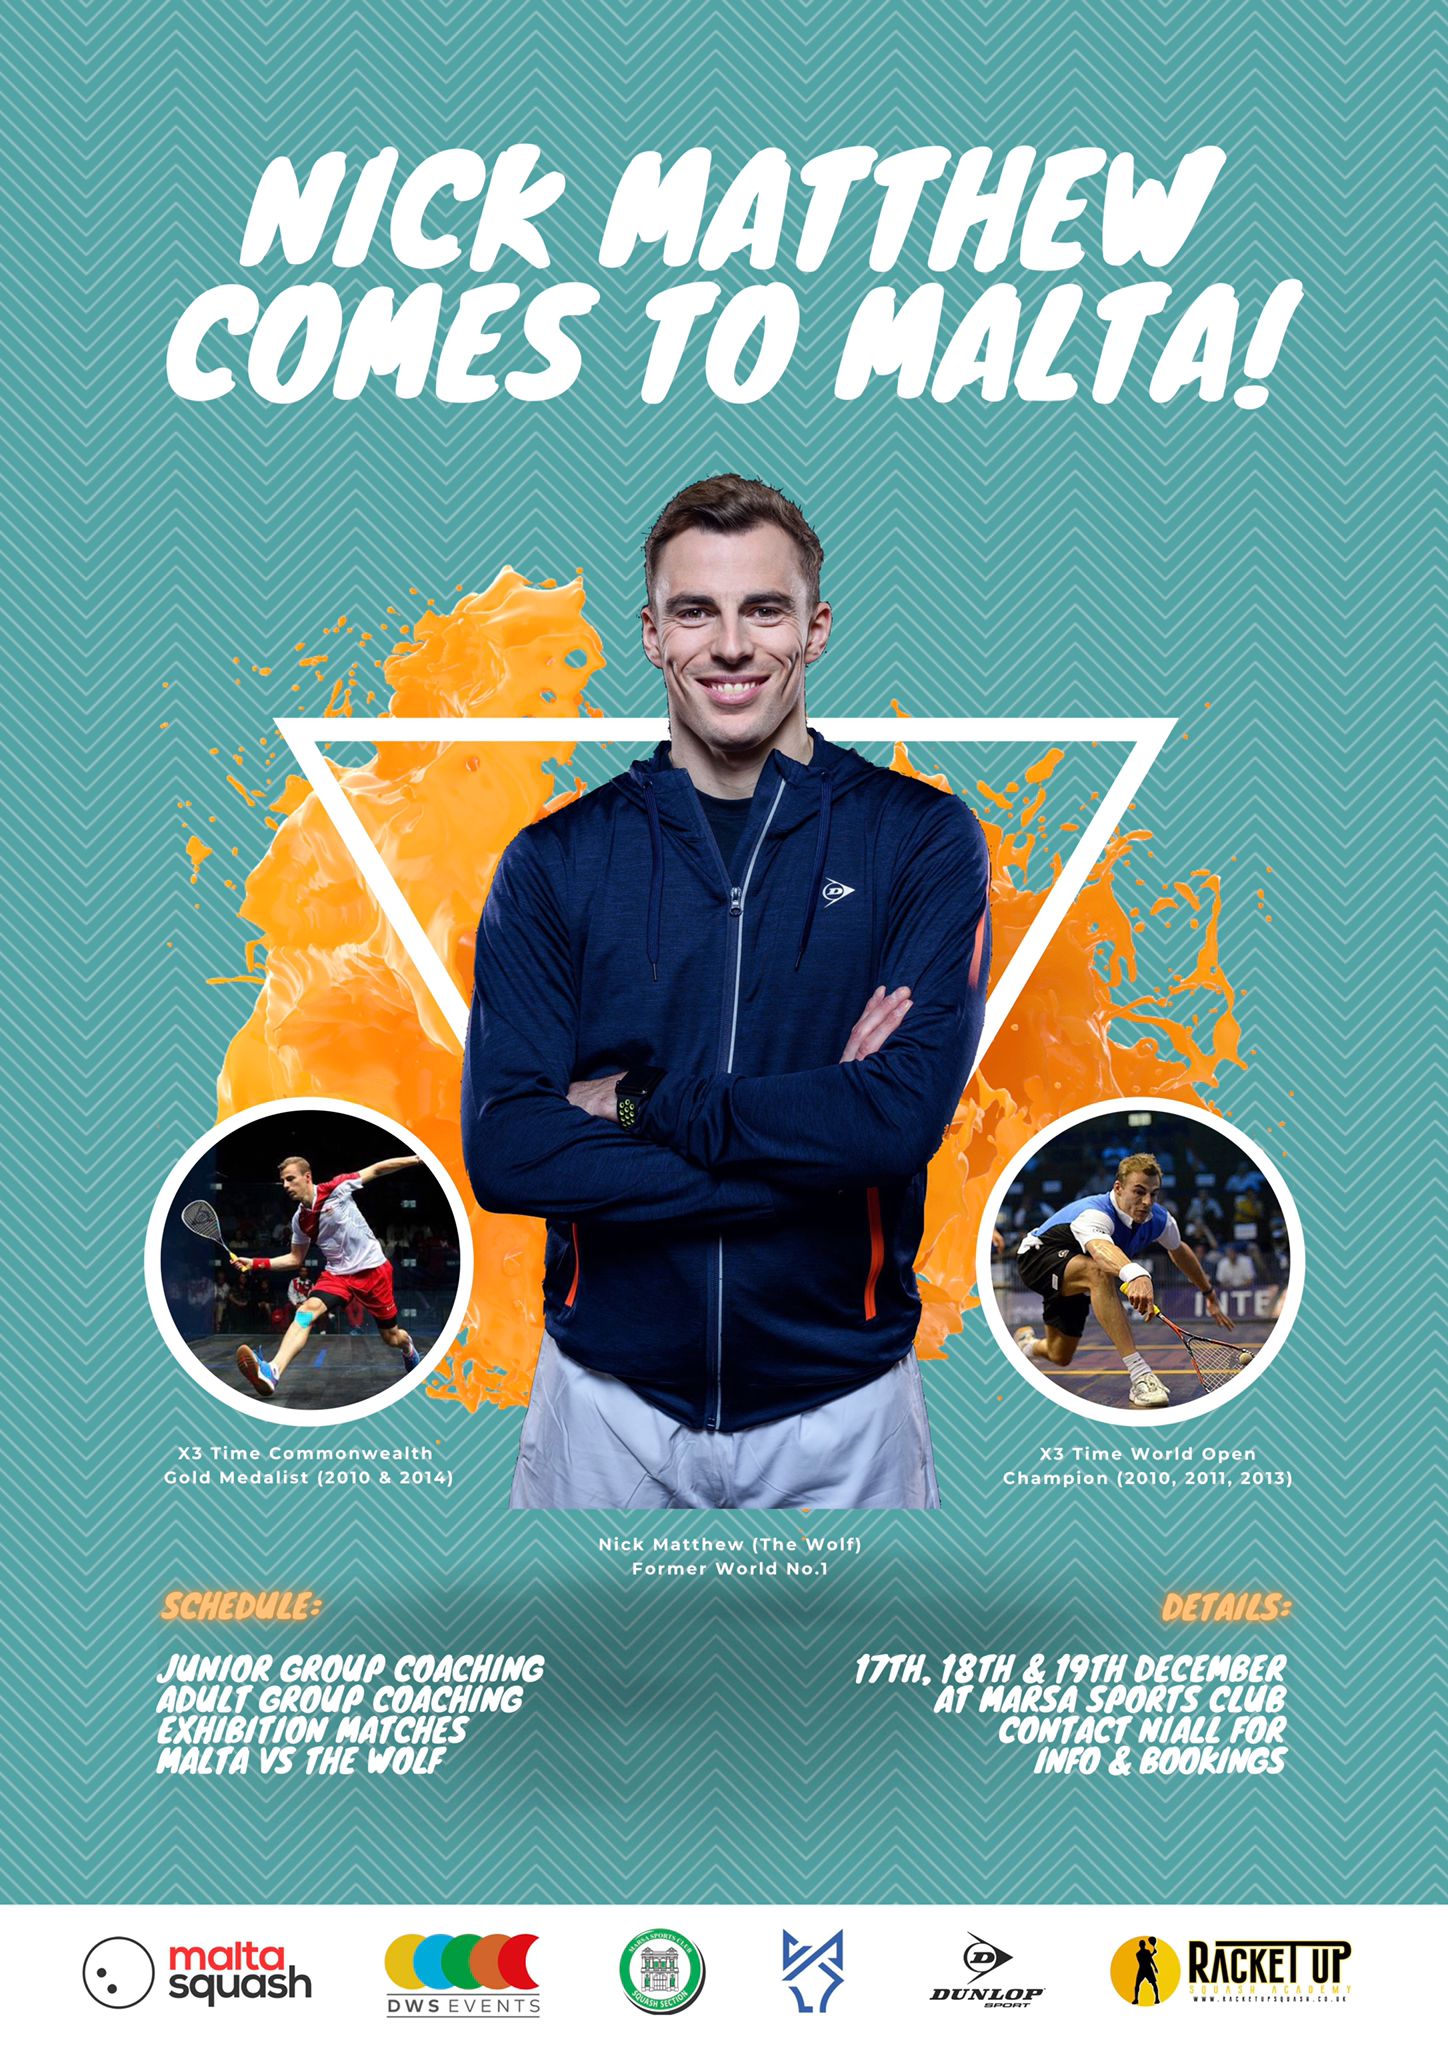 Nick Matthew in Malta: Coaching Clinic & Exhibition